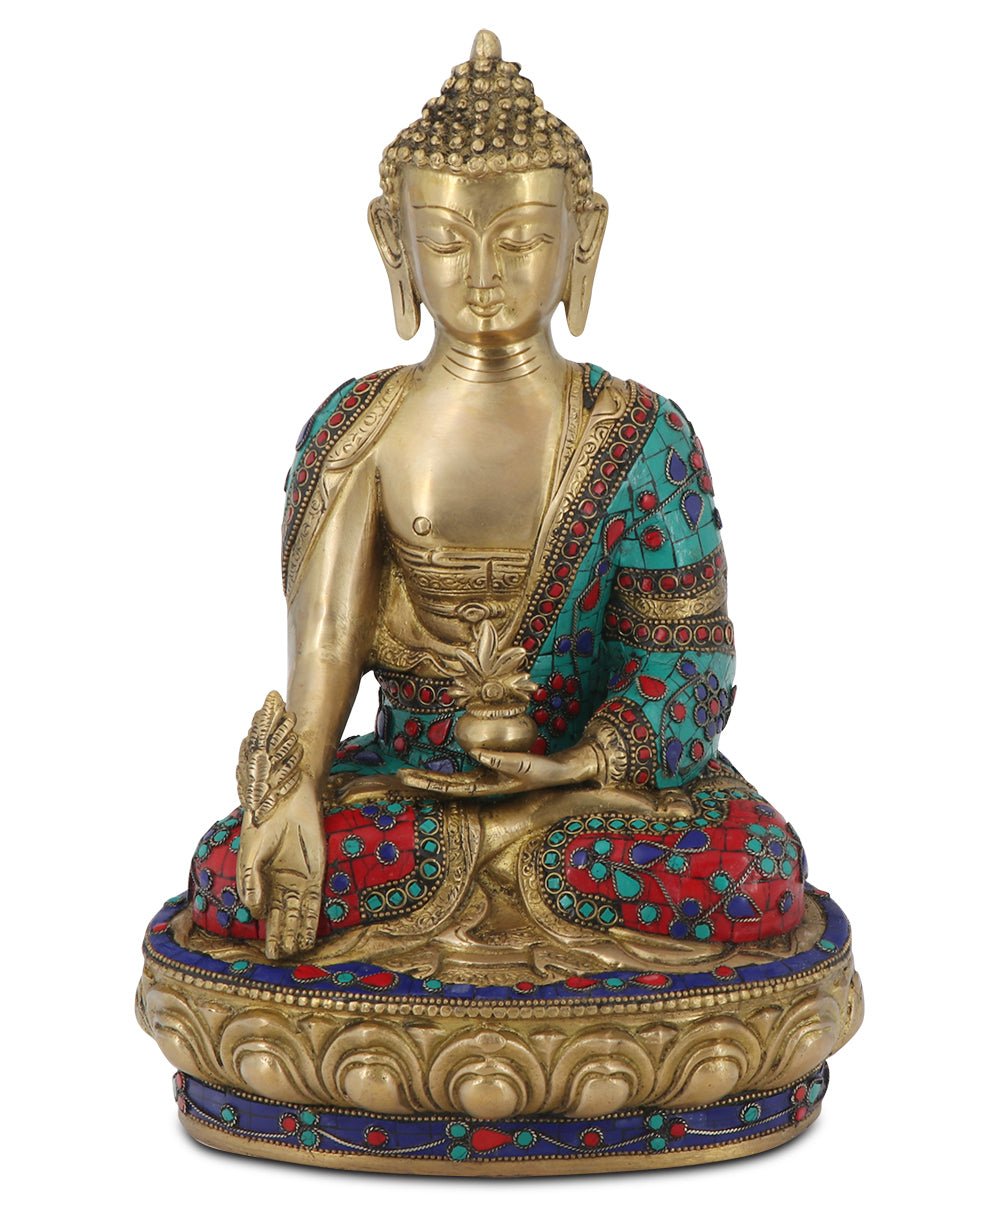 Colorful Brass Healing Medicine Buddha Statue - Sculptures & Statues